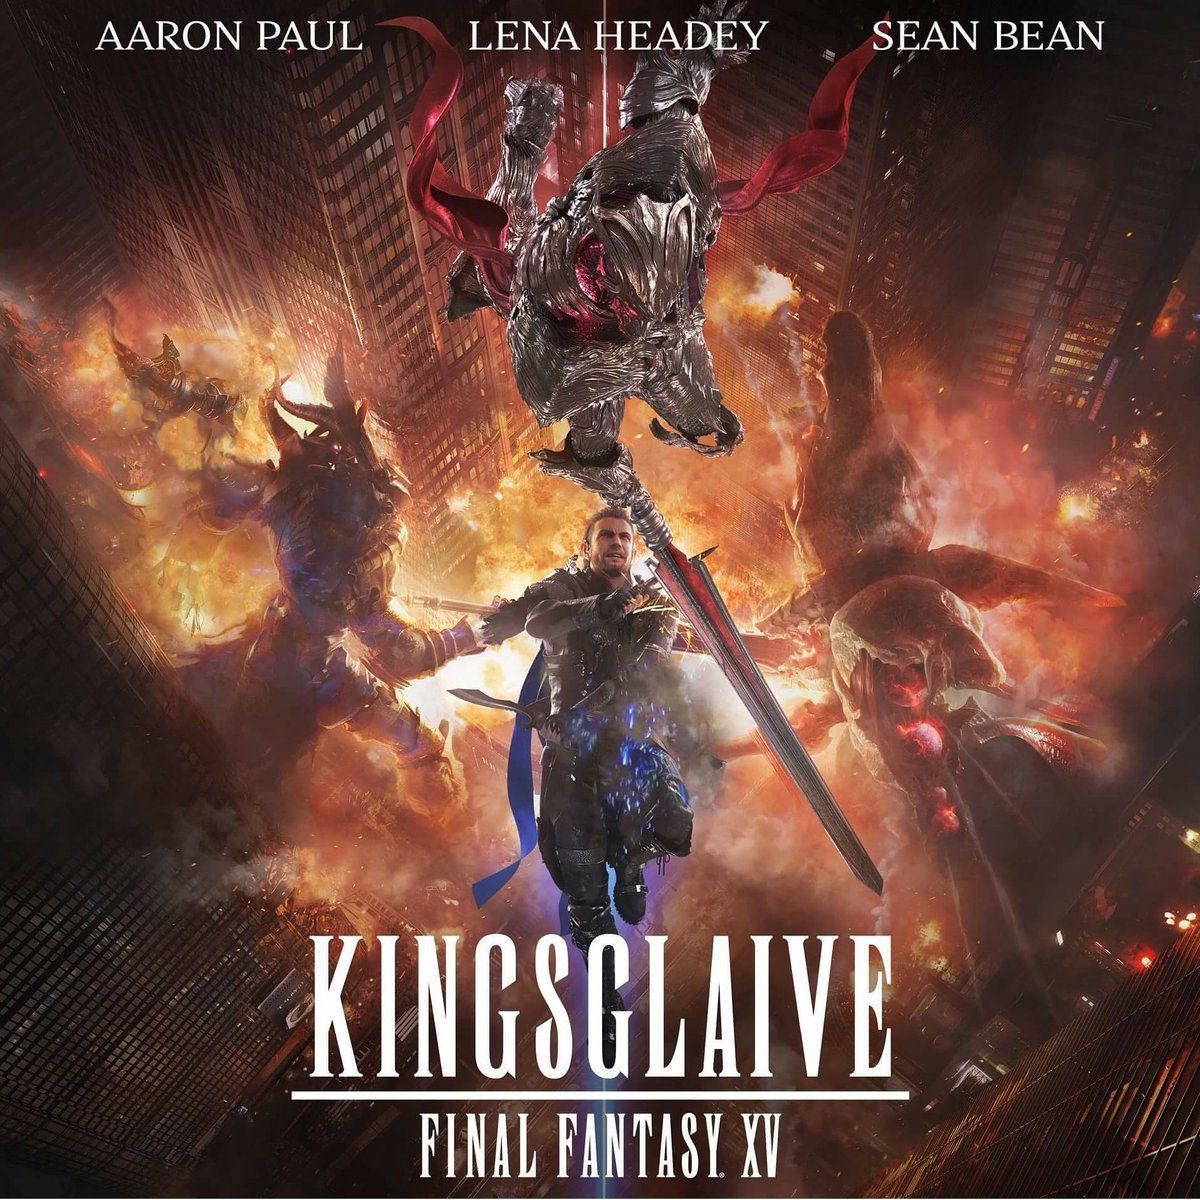 Kingsglaive: Final Fantasy XV wallpaper, Movie, HQ Kingsglaive: Final Fantasy XV pictureK Wallpaper 2019